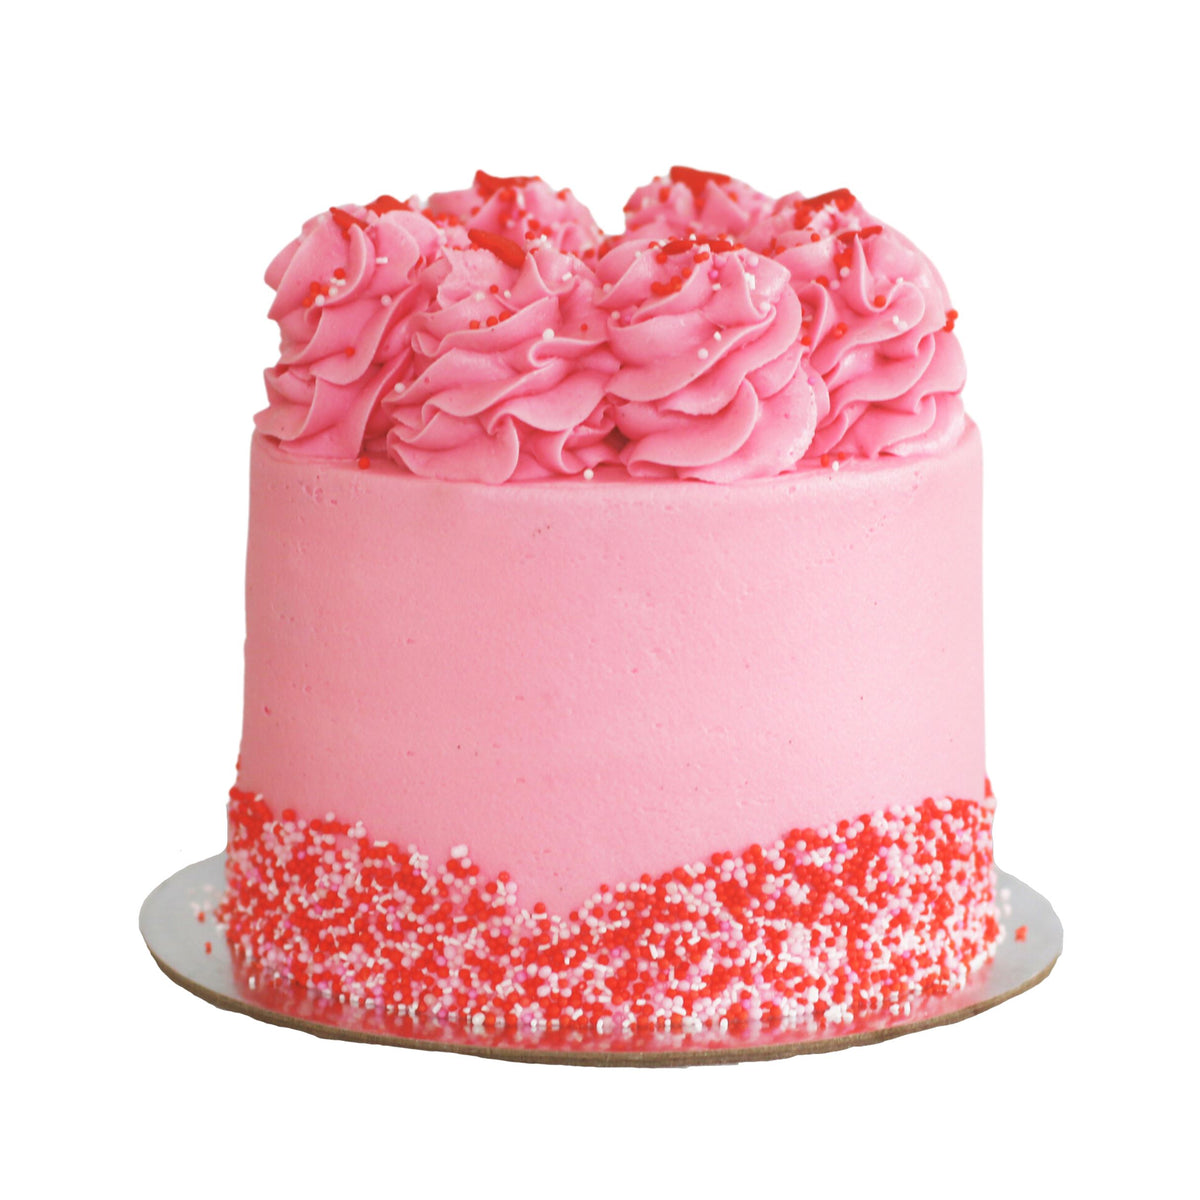 Raspberry Chocolate Cake Cakes The Cupcake Queens 